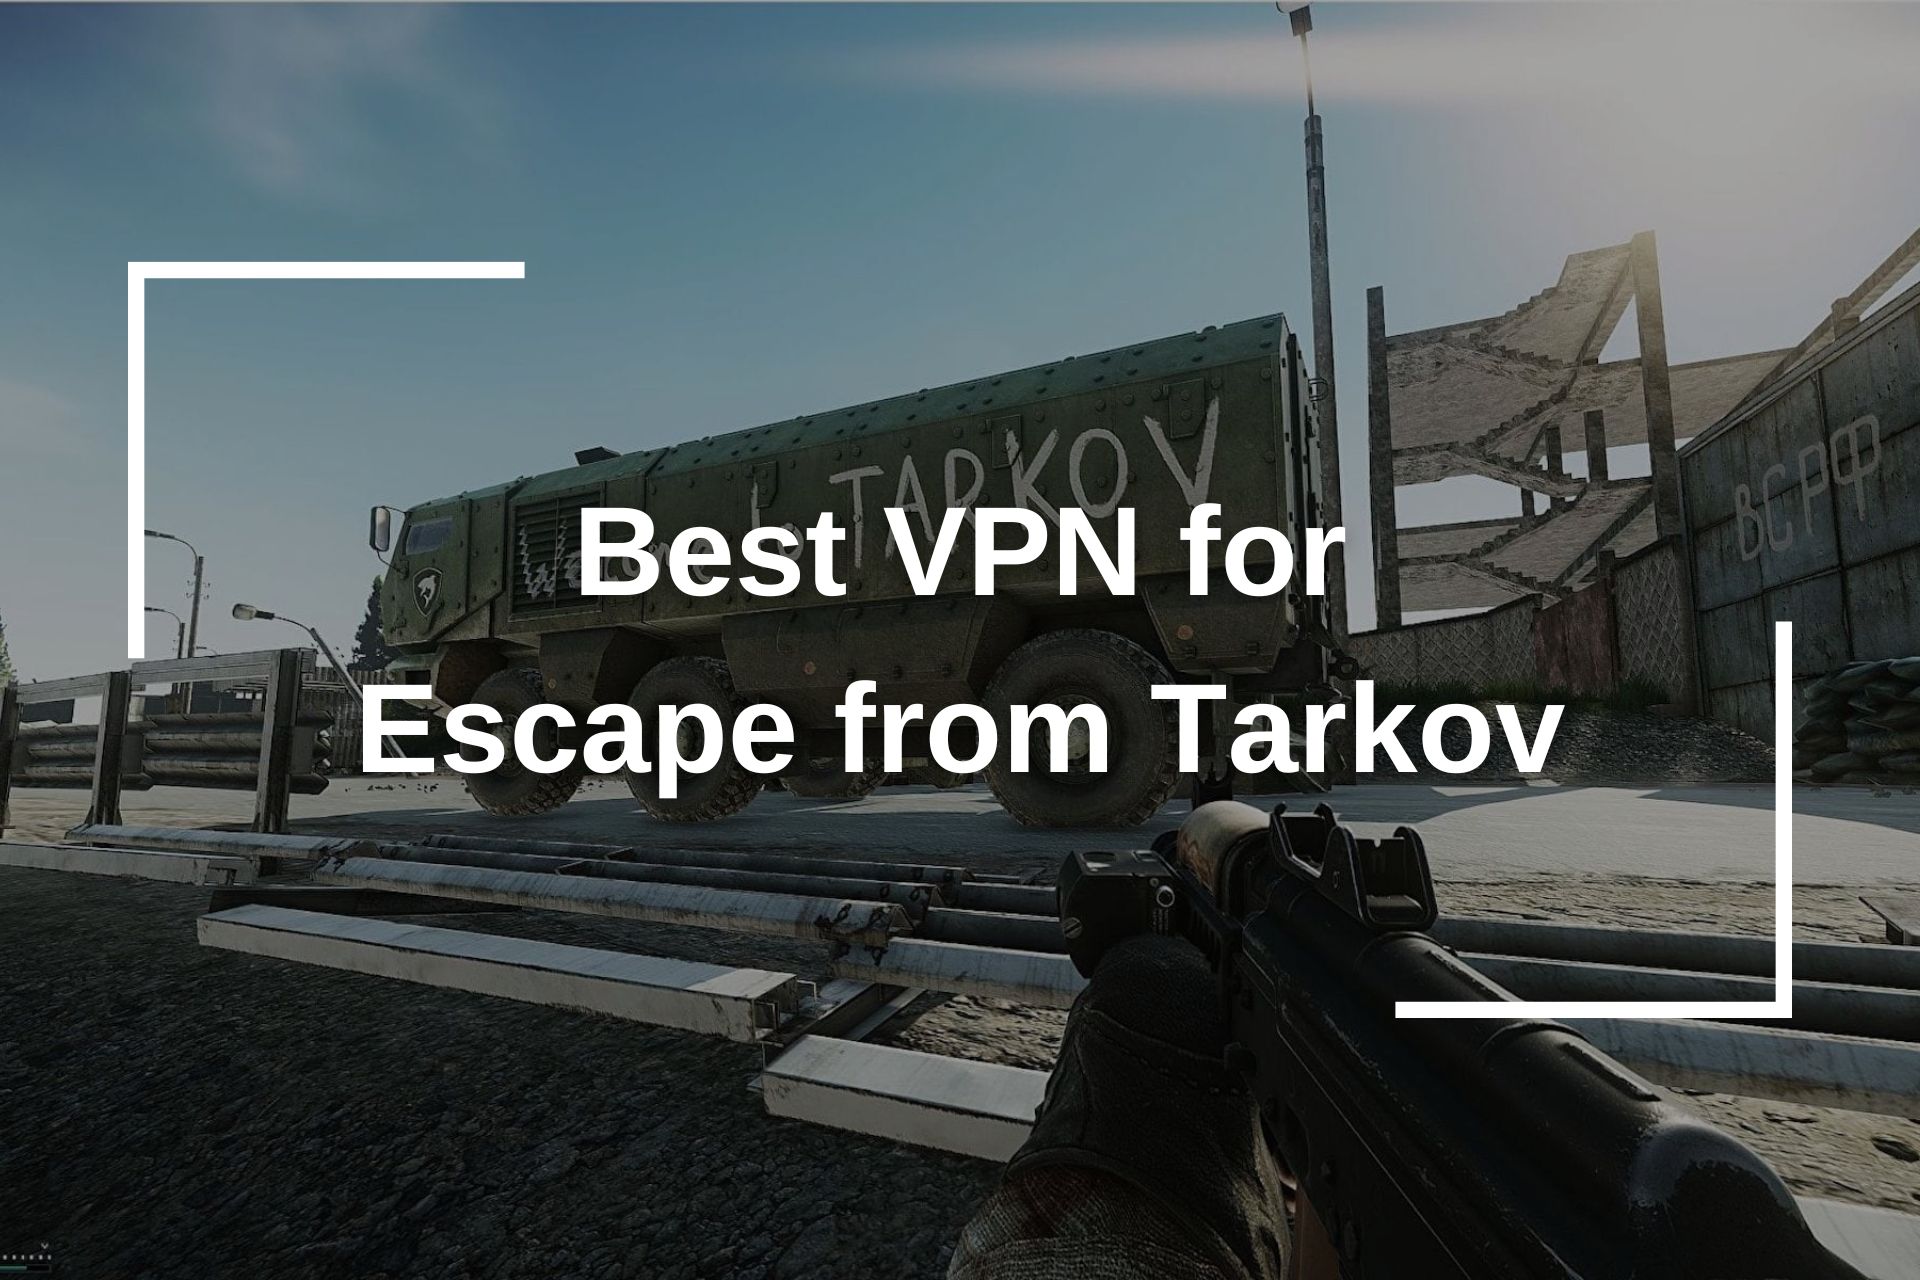 Best VPN for Escape from Tarkov